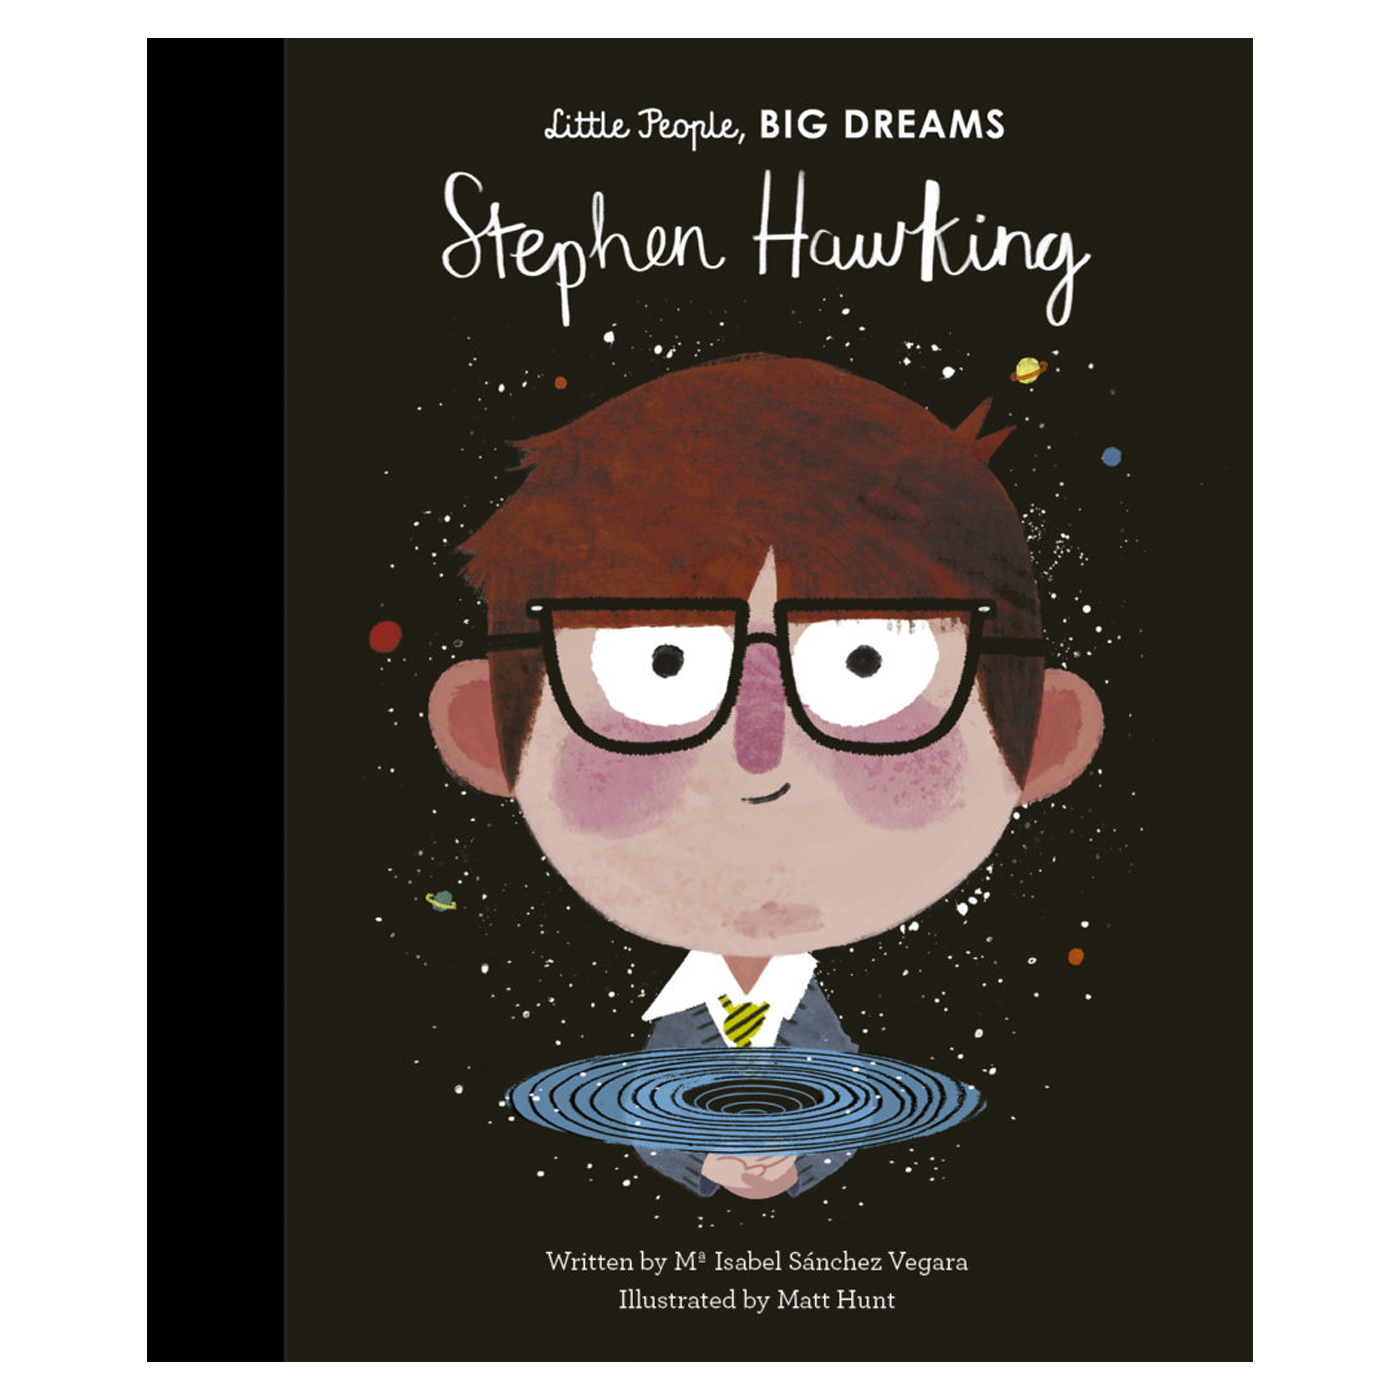  Little People Big Dreams: Stephen Hawking